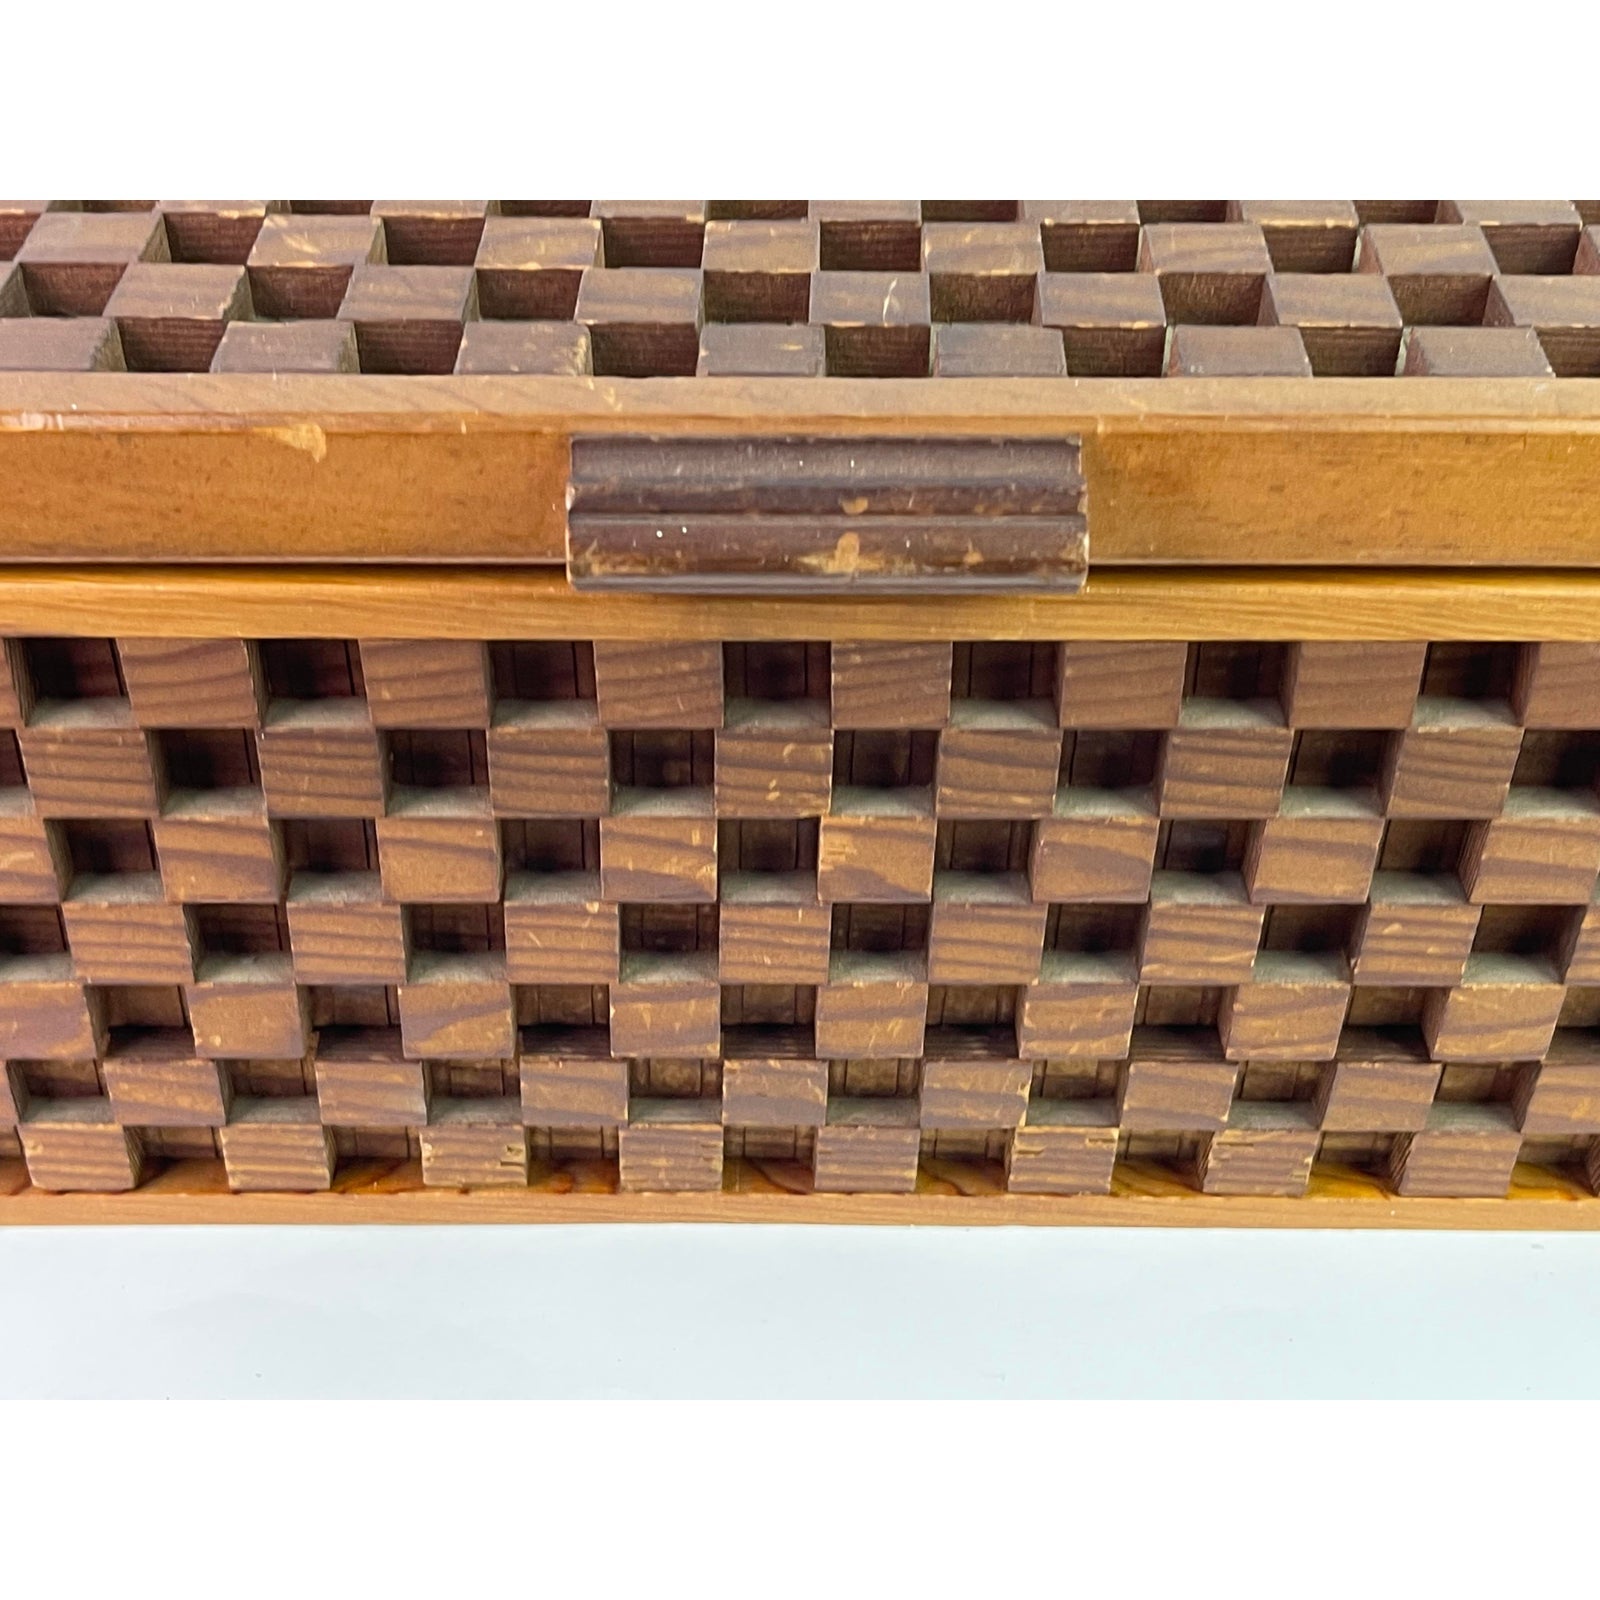 Checkerboard Carved Gucci Style Walnut Wood Storage Box ABBY ESSIE STUDIOS